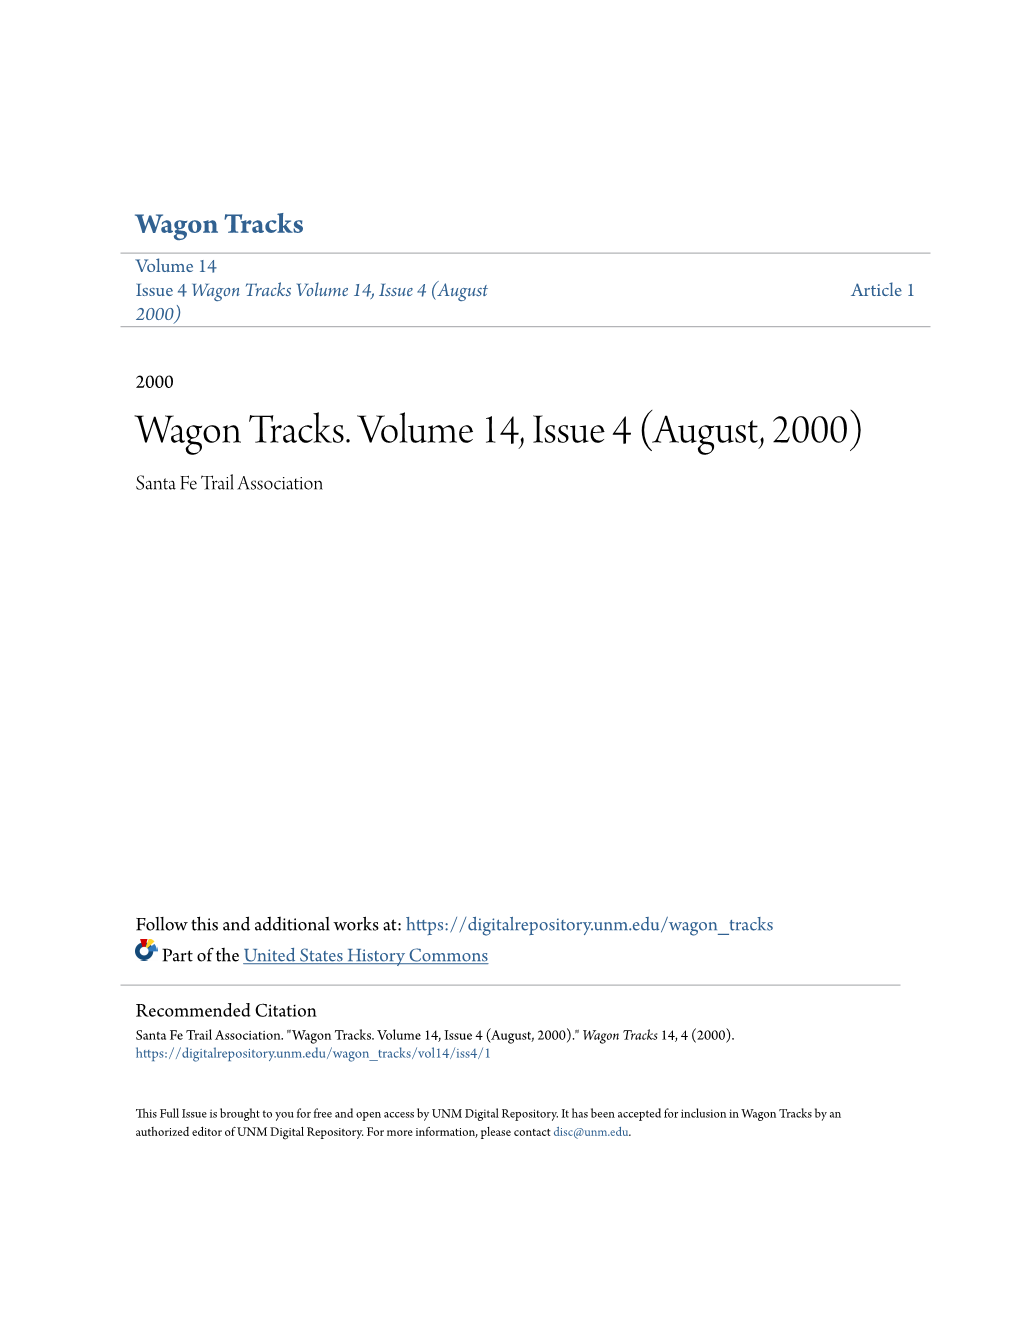 Wagon Tracks. Volume 14, Issue 4 (August, 2000) Santa Fe Trail Association